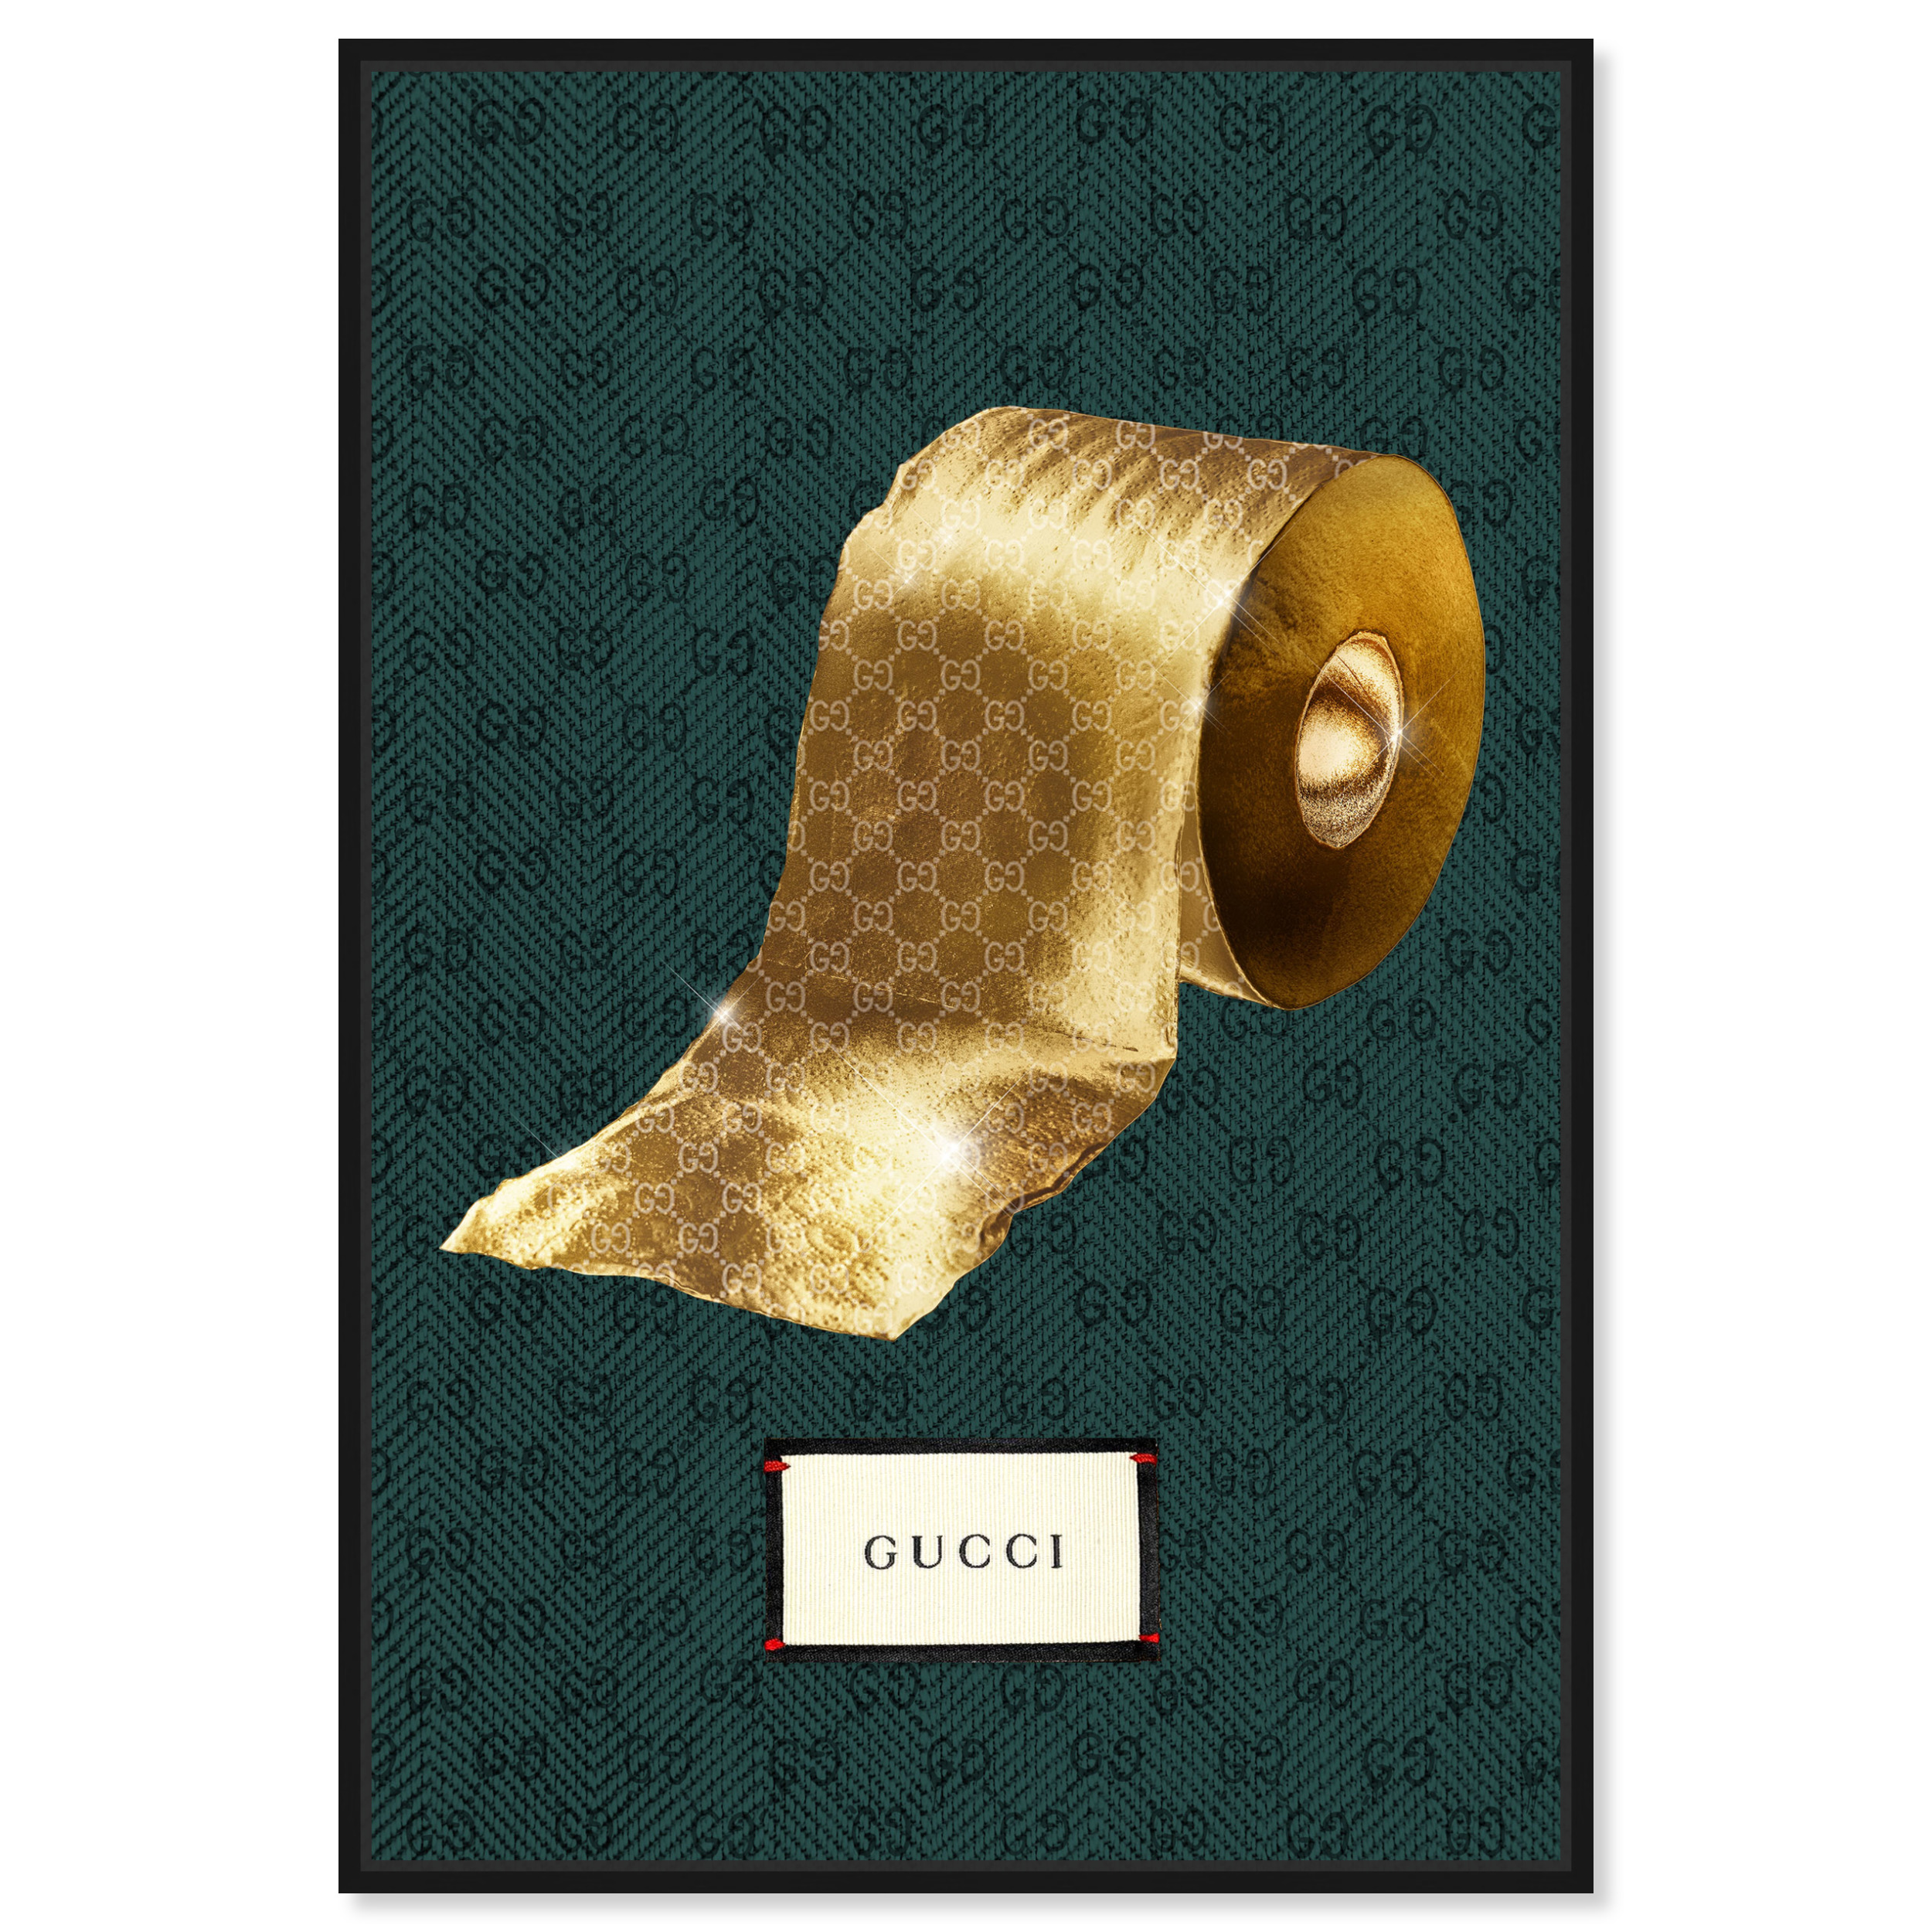 Gucci Toilet Paper